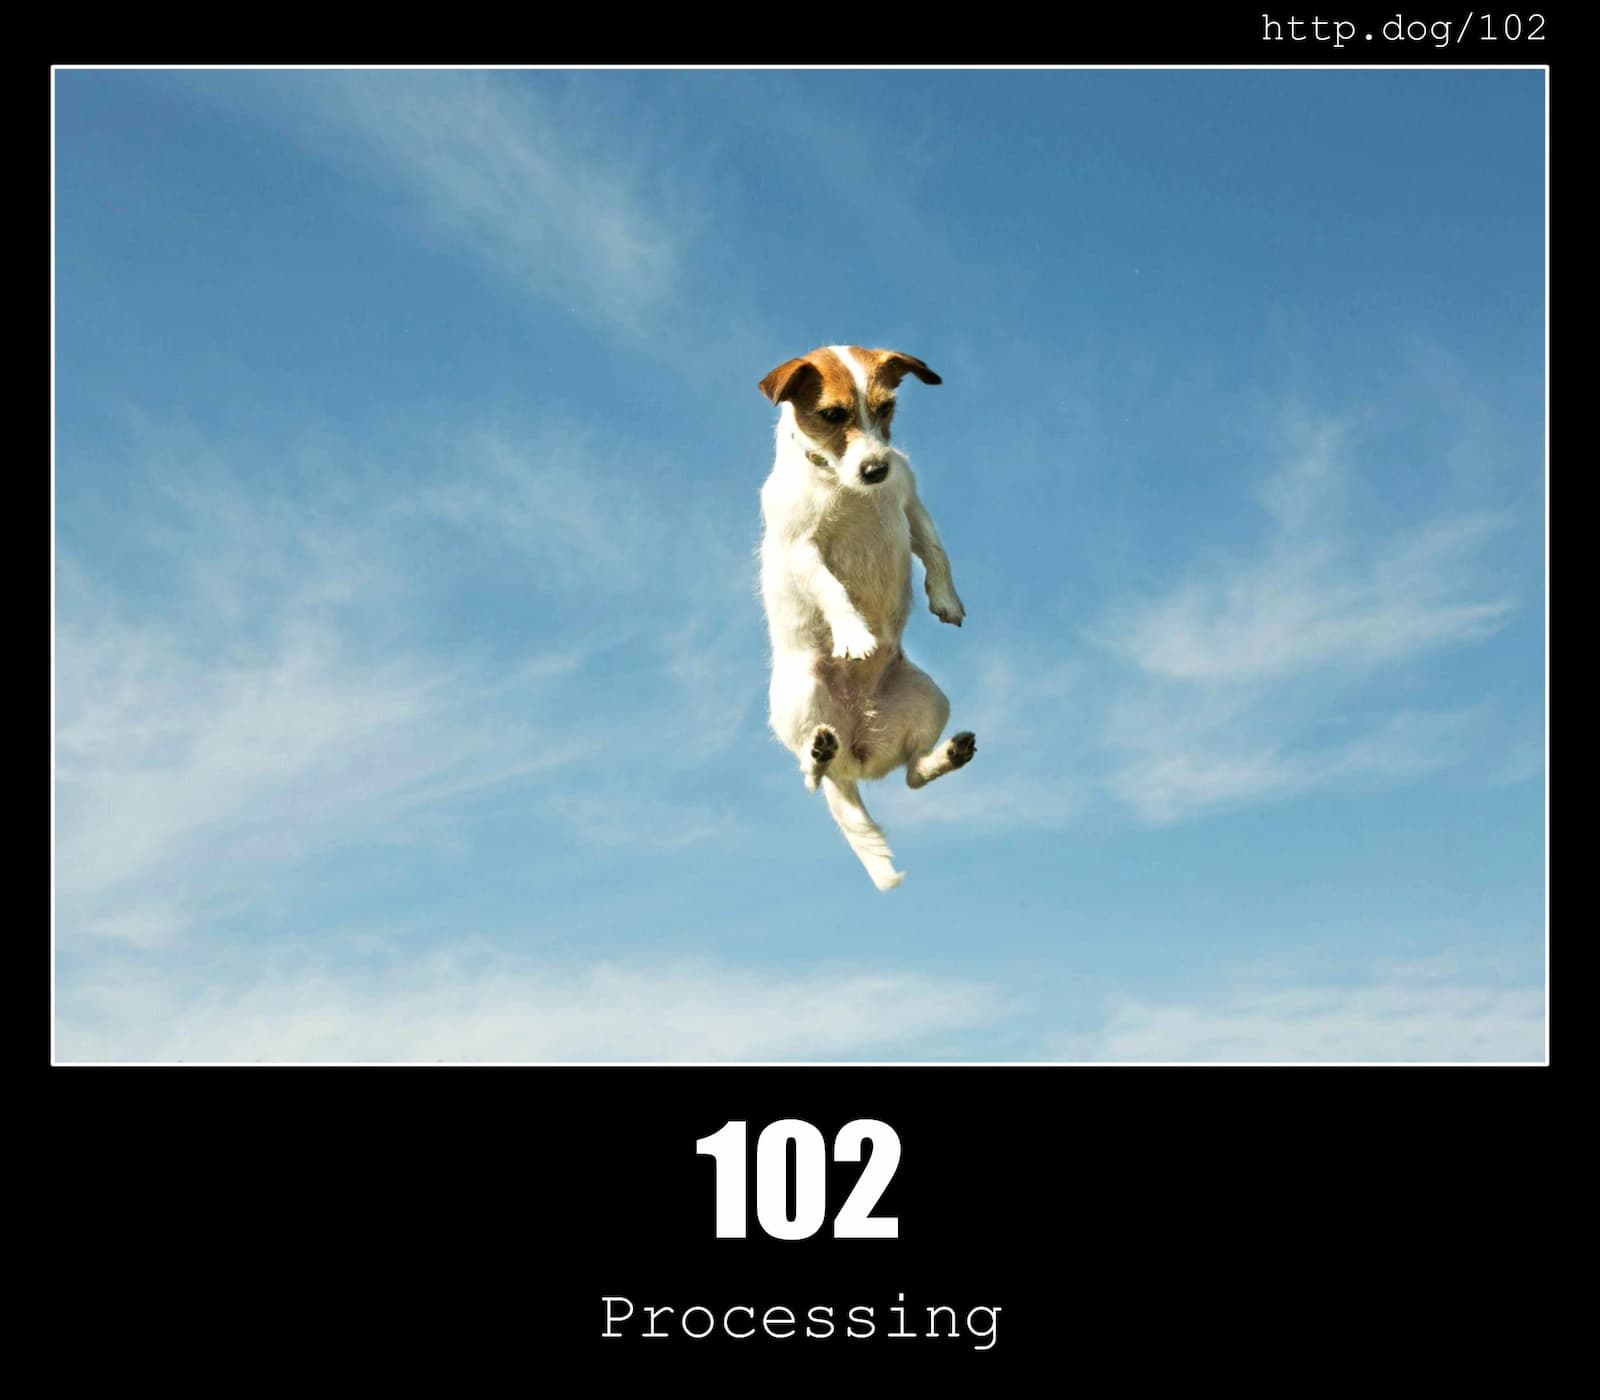 HTTP Status Code 102 Processing